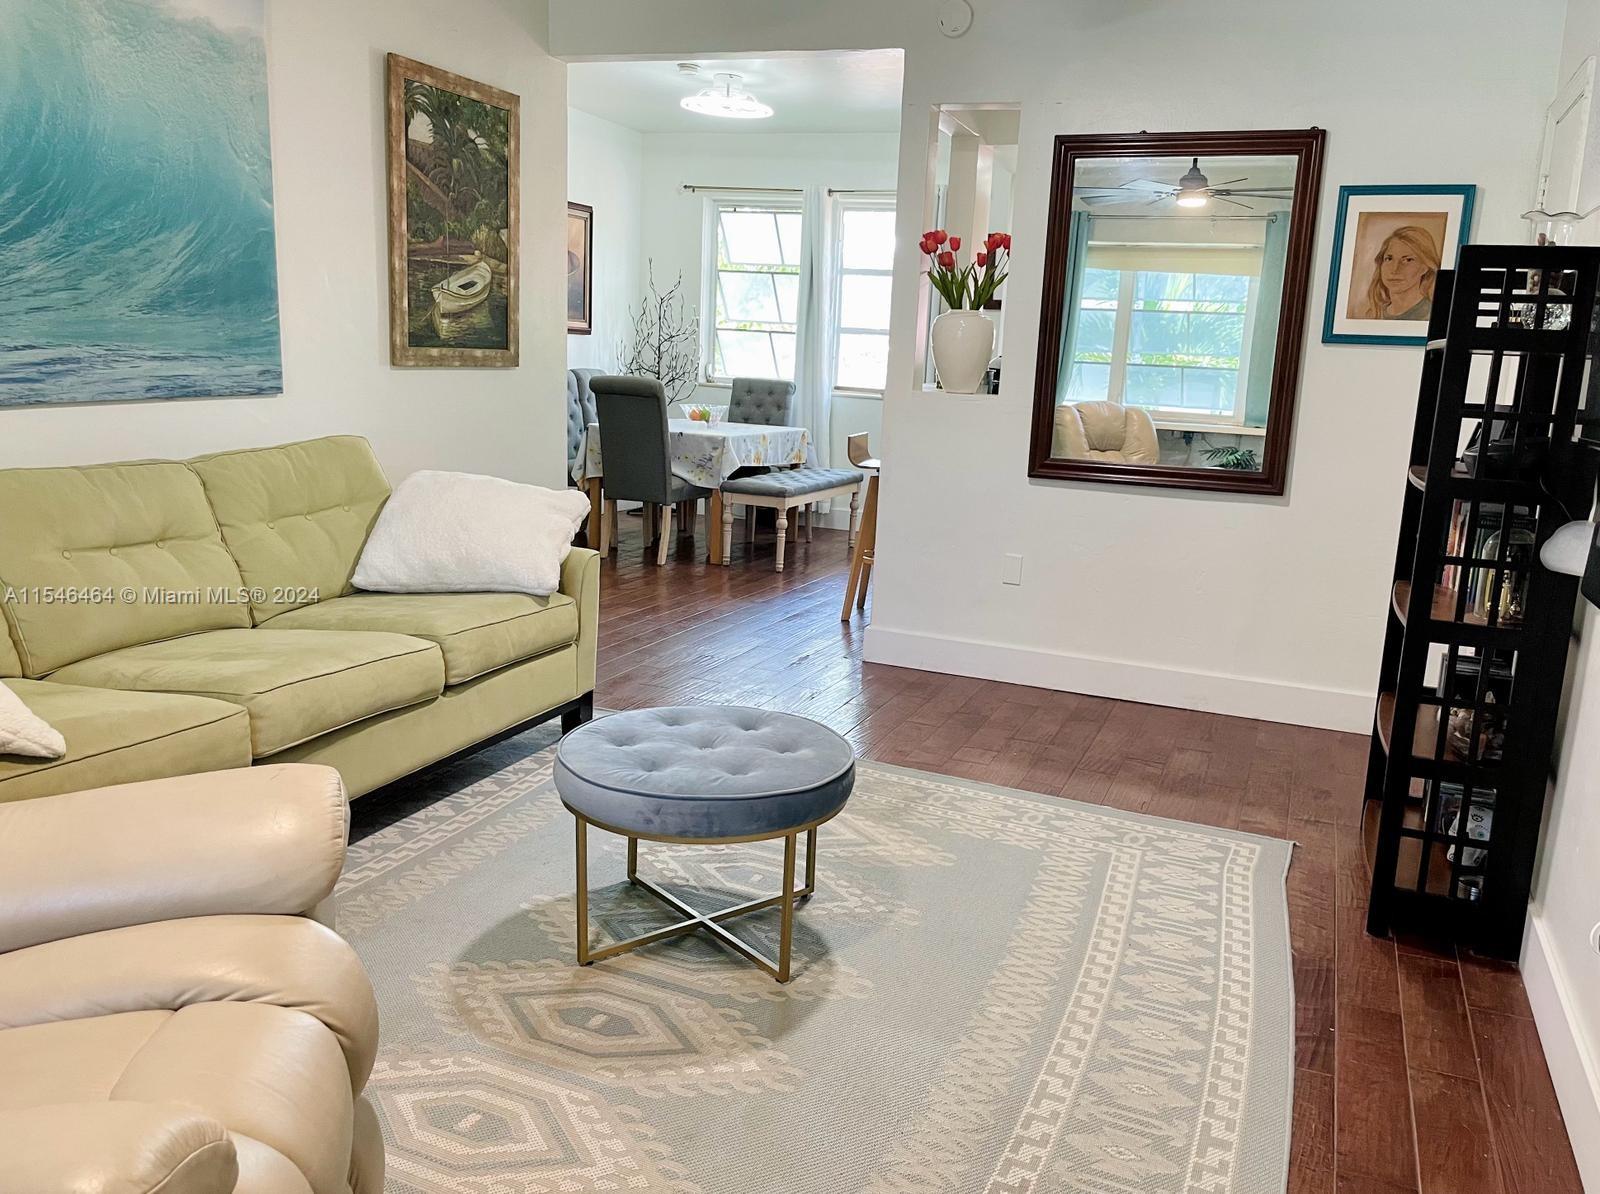 Property for Sale at 728 Lenox Ave 7A, Miami Beach, Miami-Dade County, Florida - Bedrooms: 1 
Bathrooms: 1  - $259,000